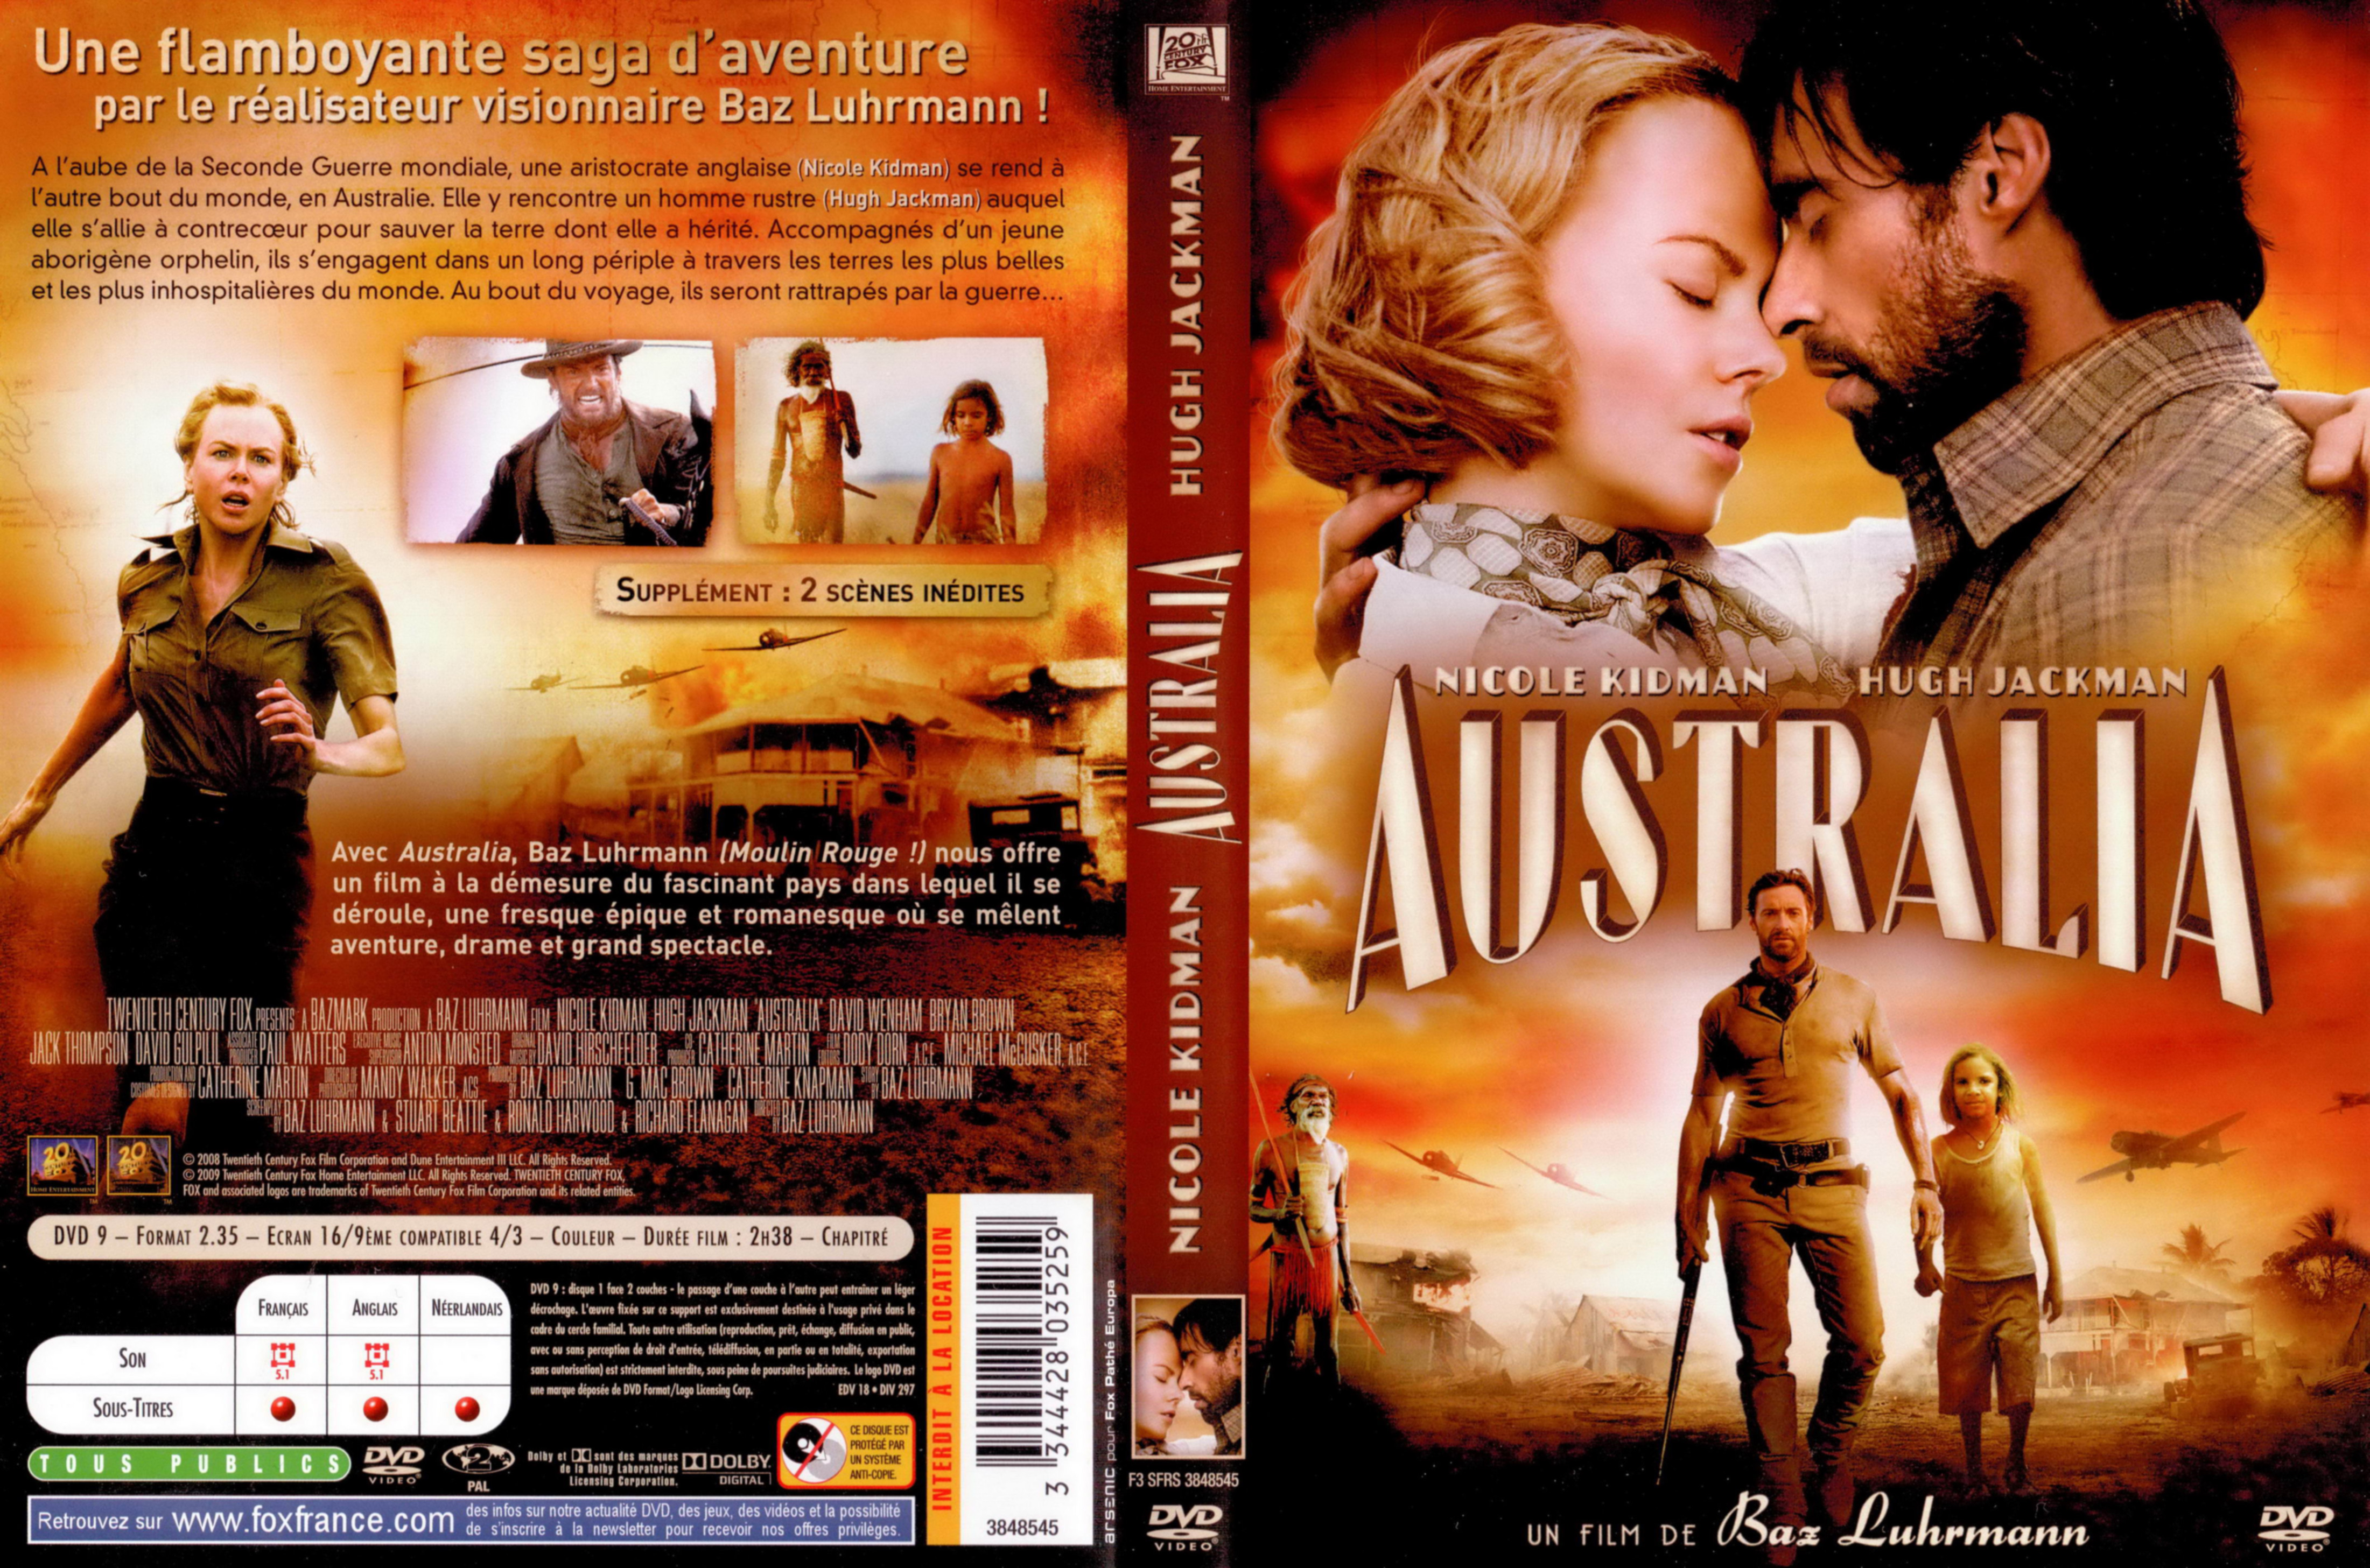 Jaquette DVD Australia